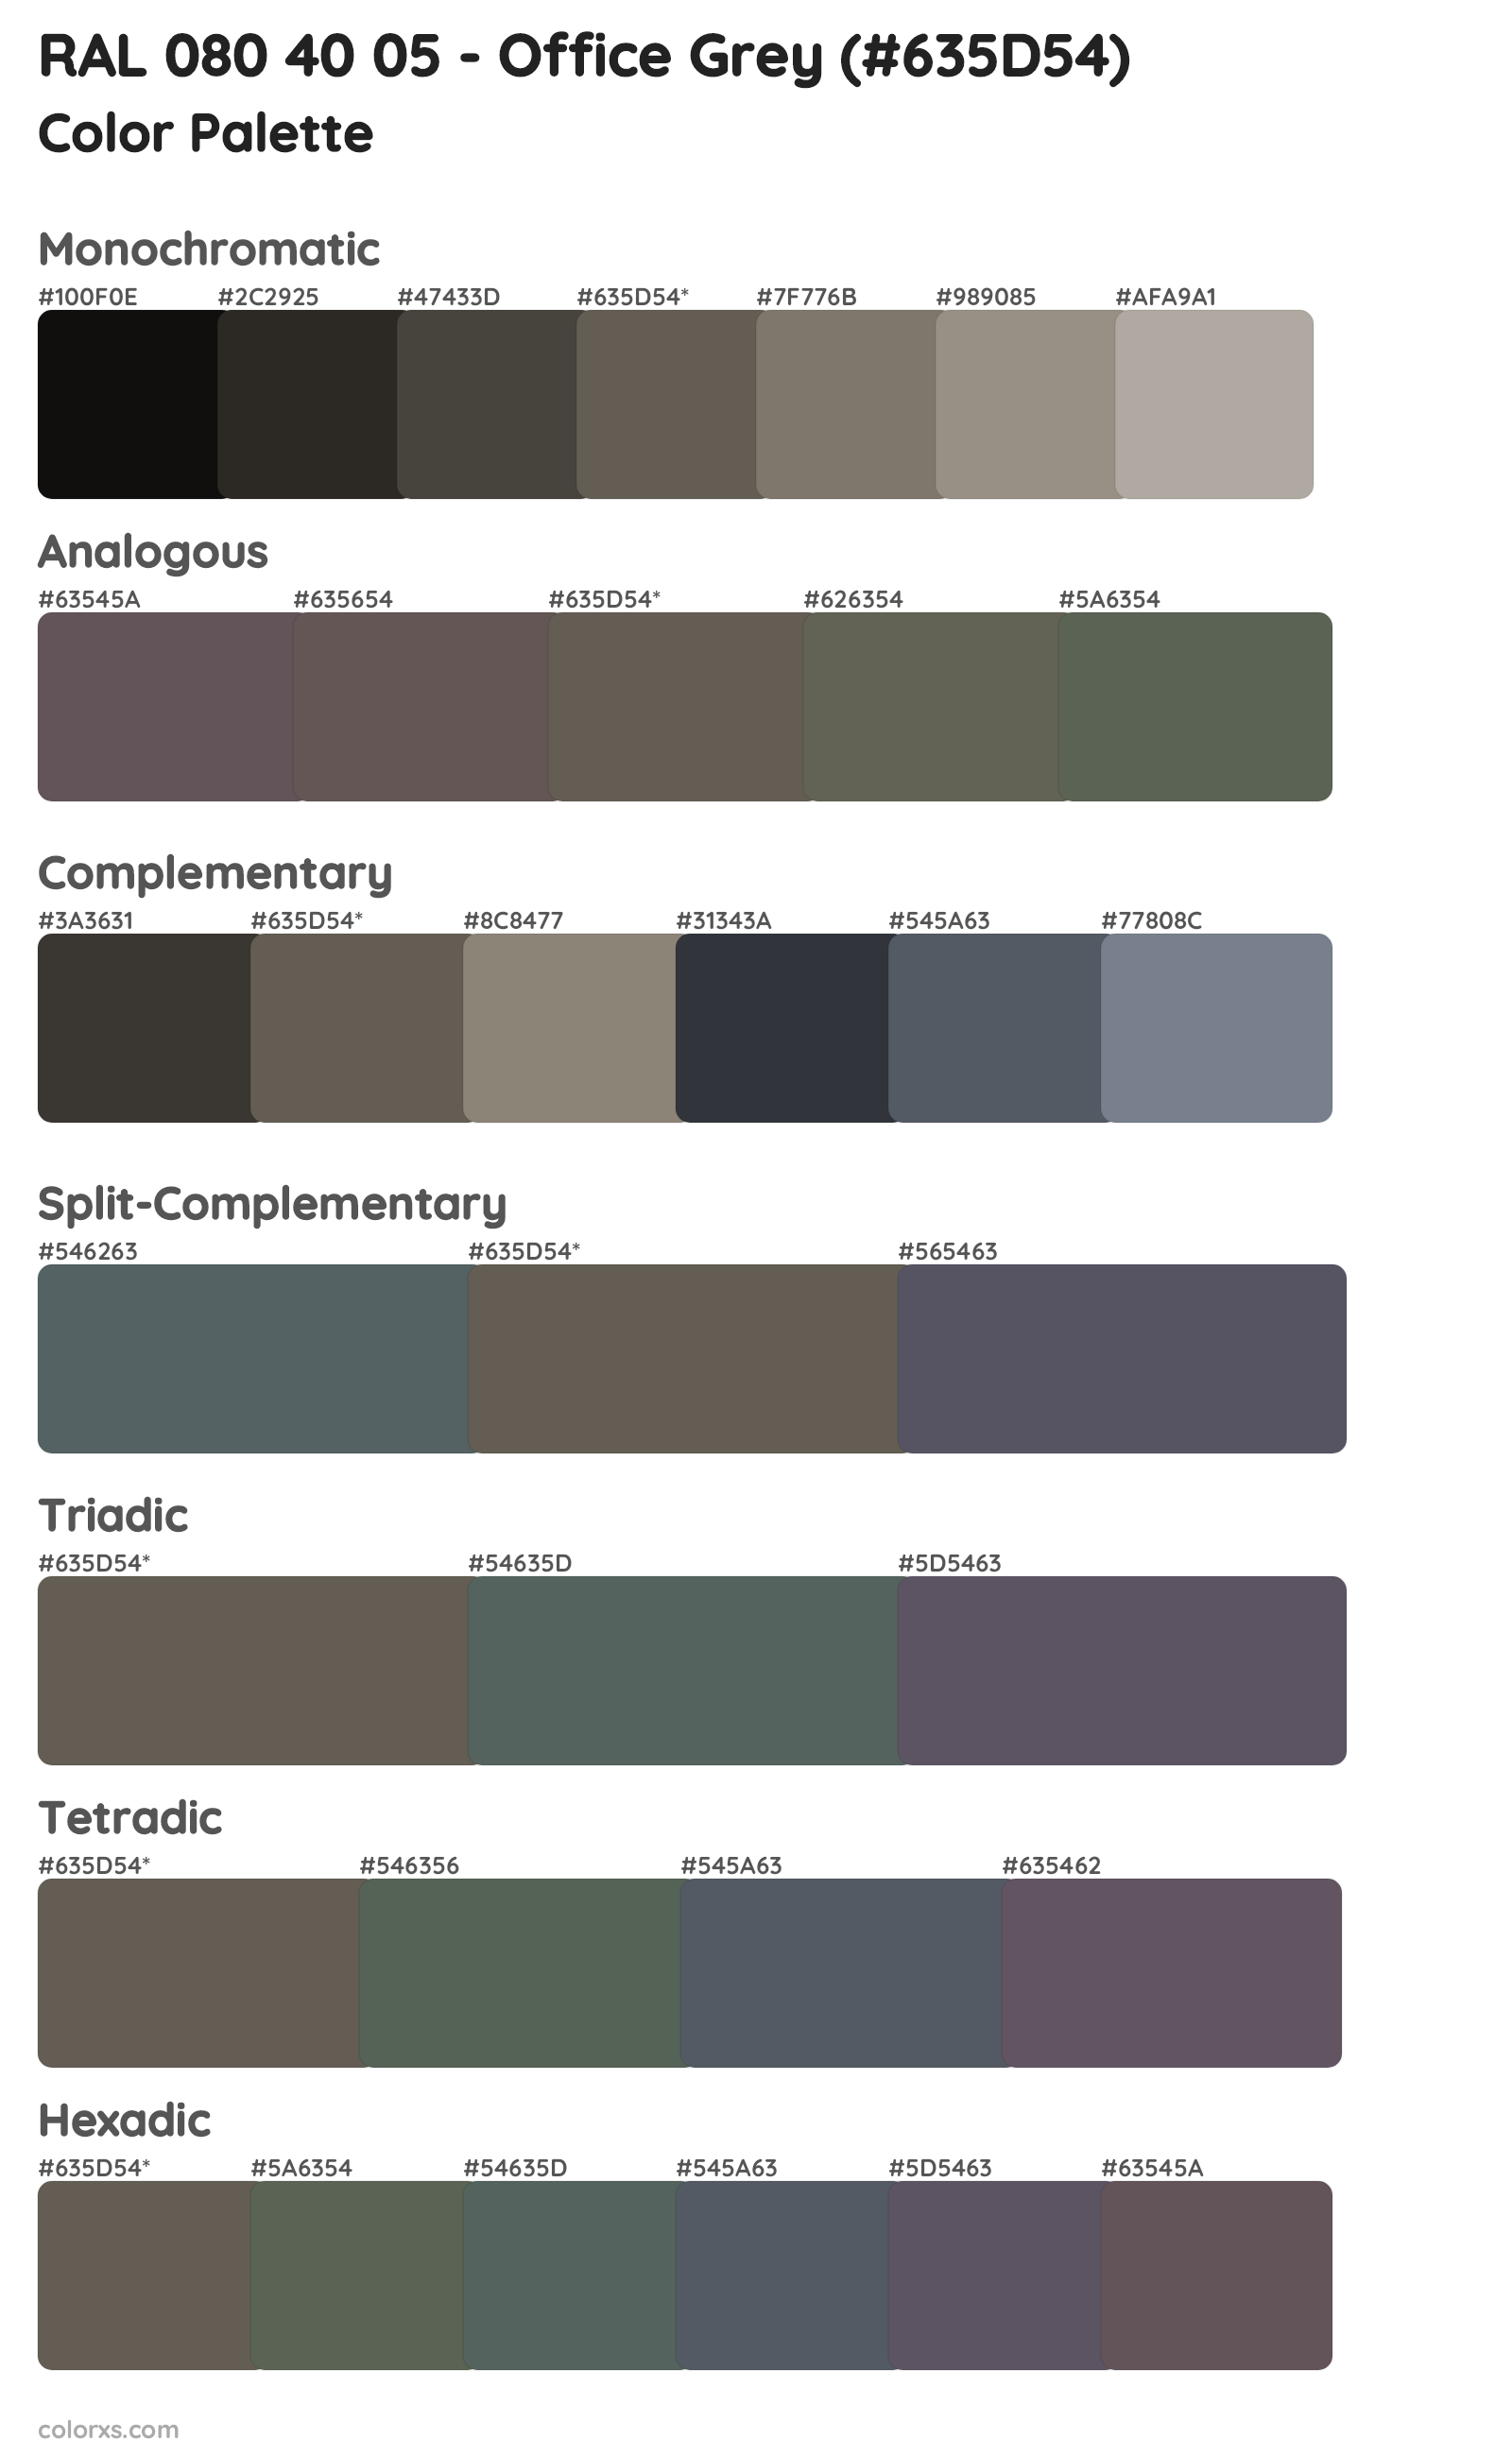 RAL 080 40 05 - Office Grey Color Scheme Palettes